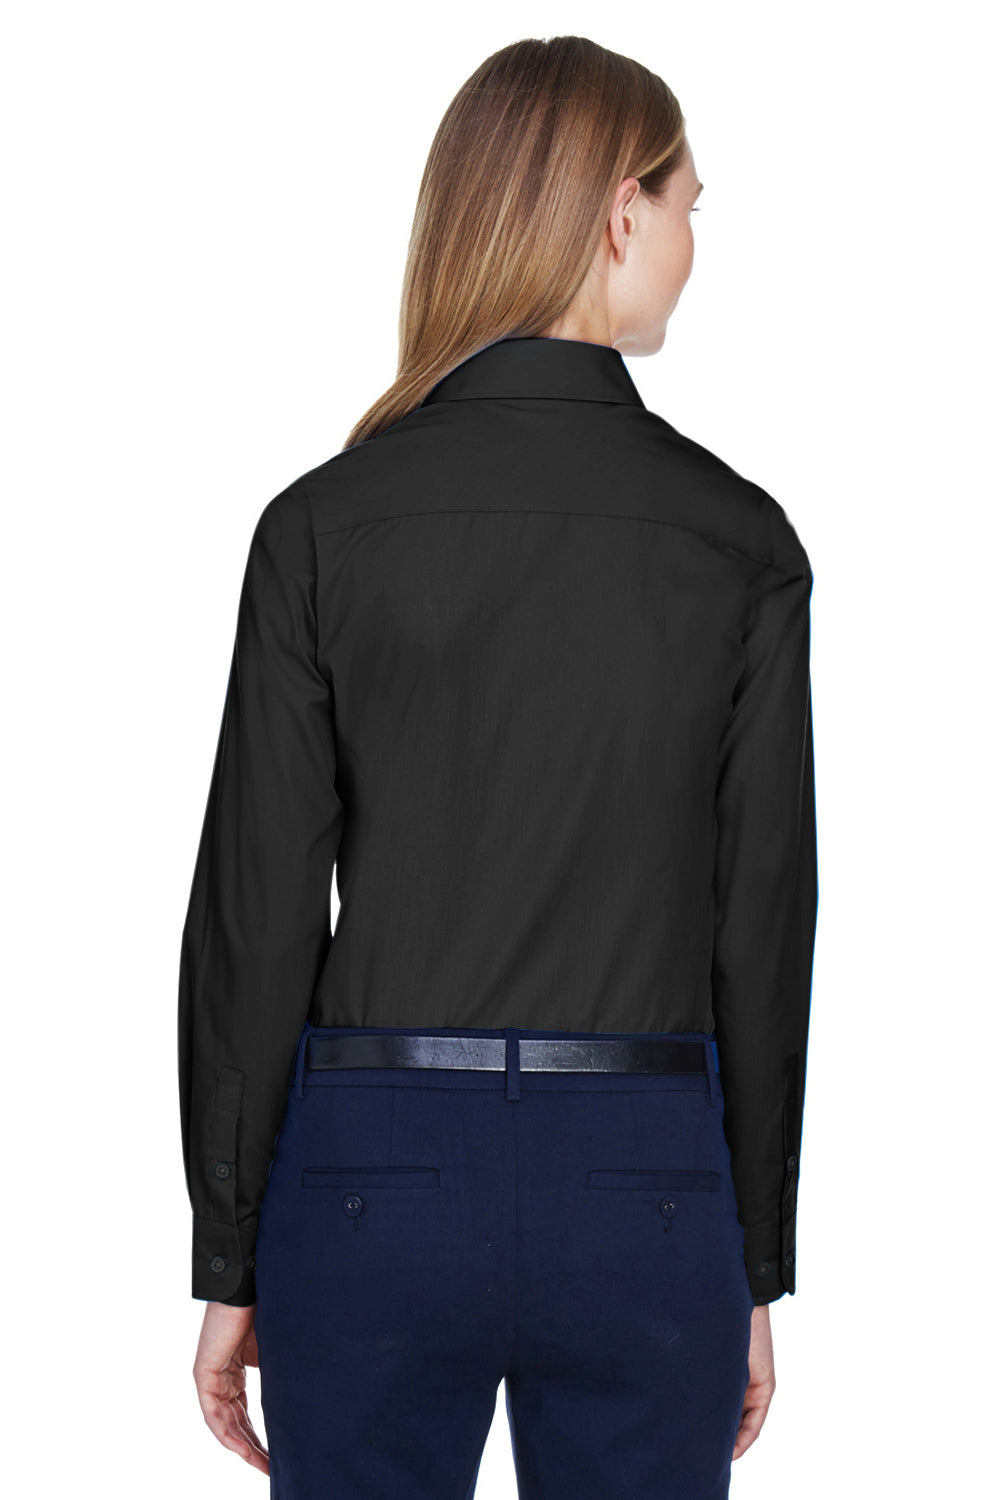 Devon & Jones D620W Womens Crown Woven Collection Wrinkle Resistant Long Sleeve Button Down Shirt Black Back